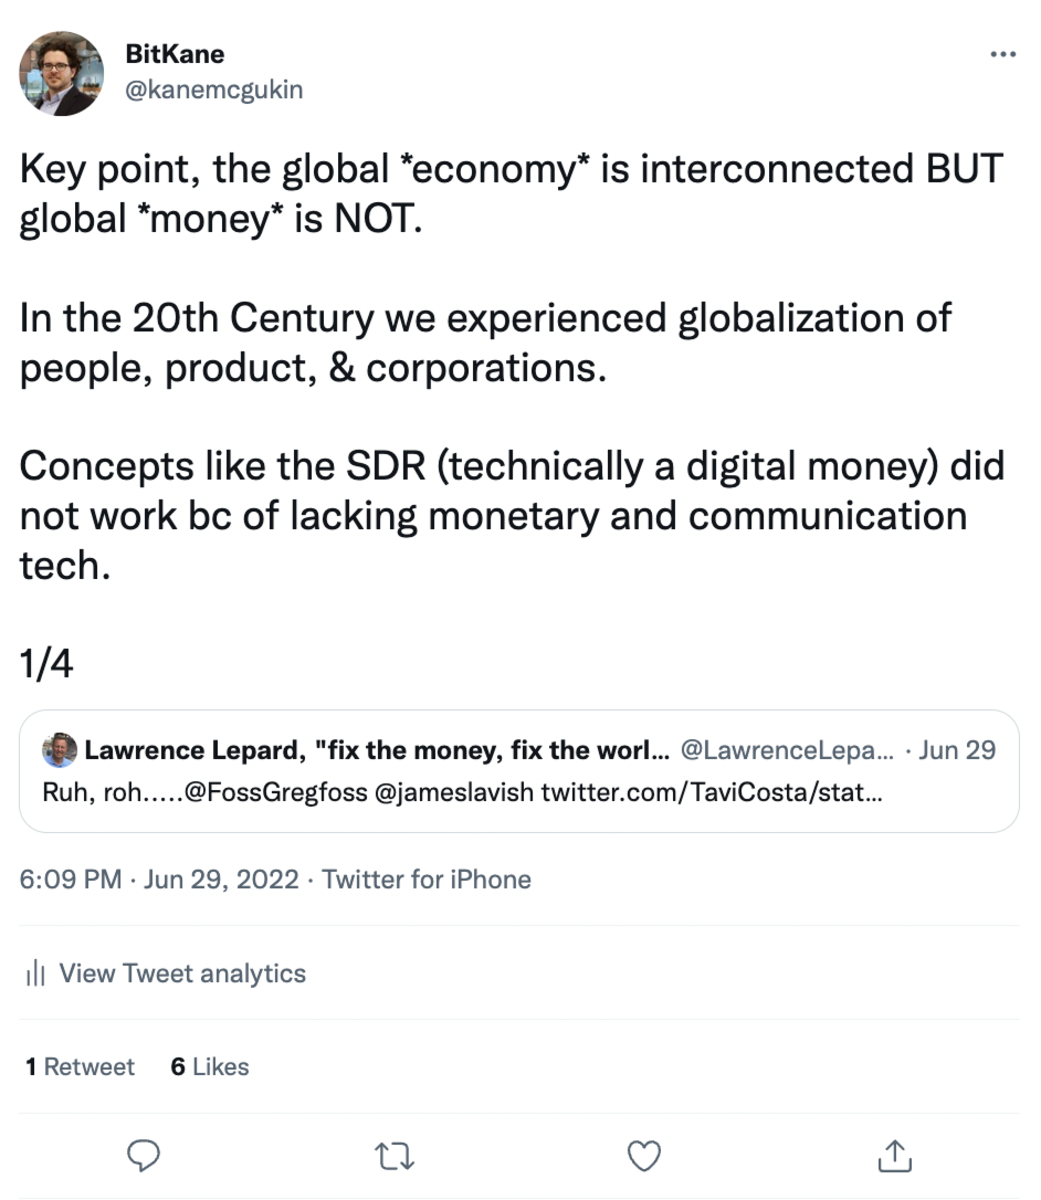 bitkane tweet about global money